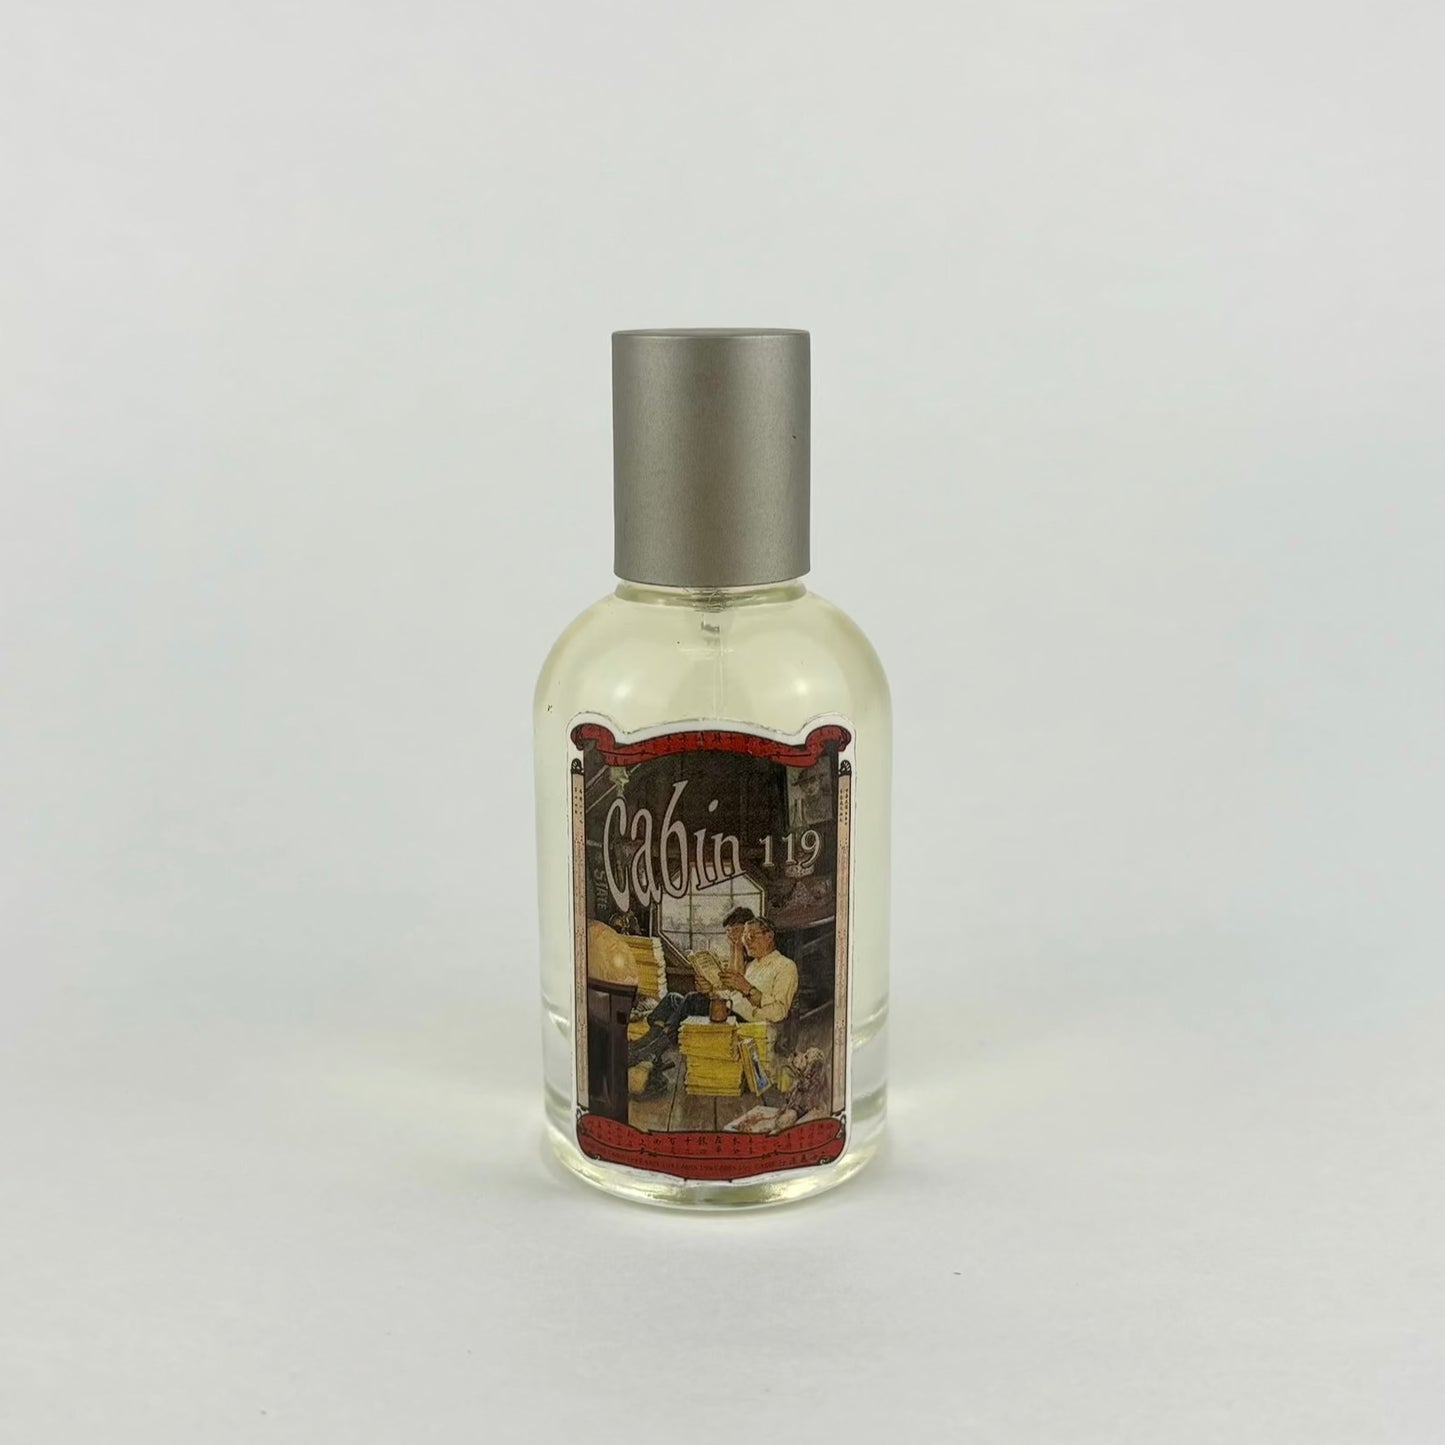 Cabin 119 Perfume EDP